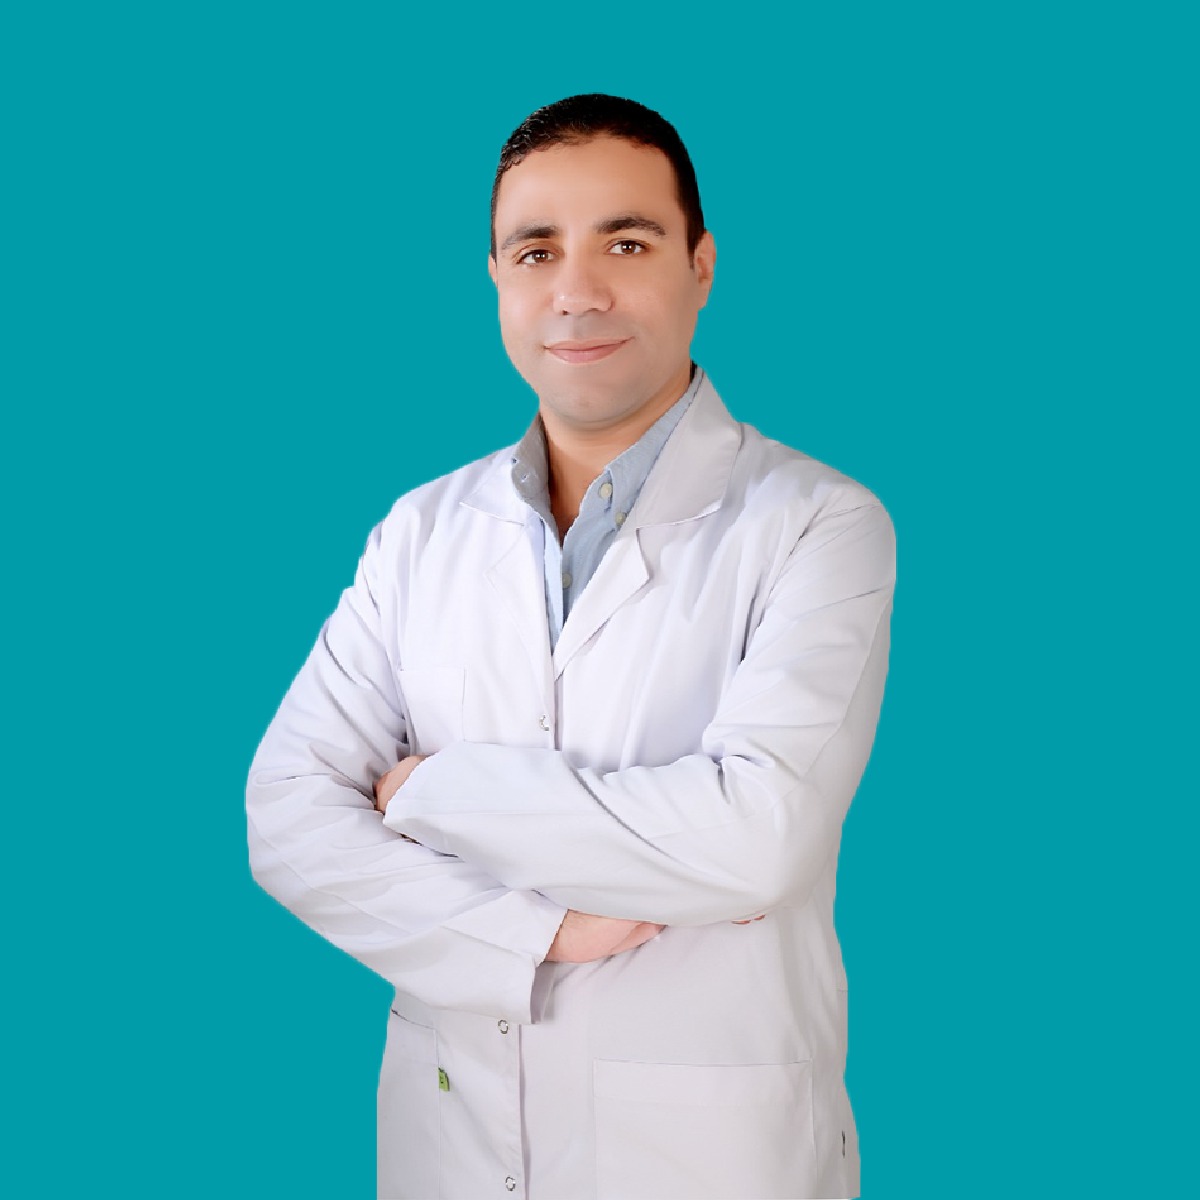 دكتور هشام عبدالكريم